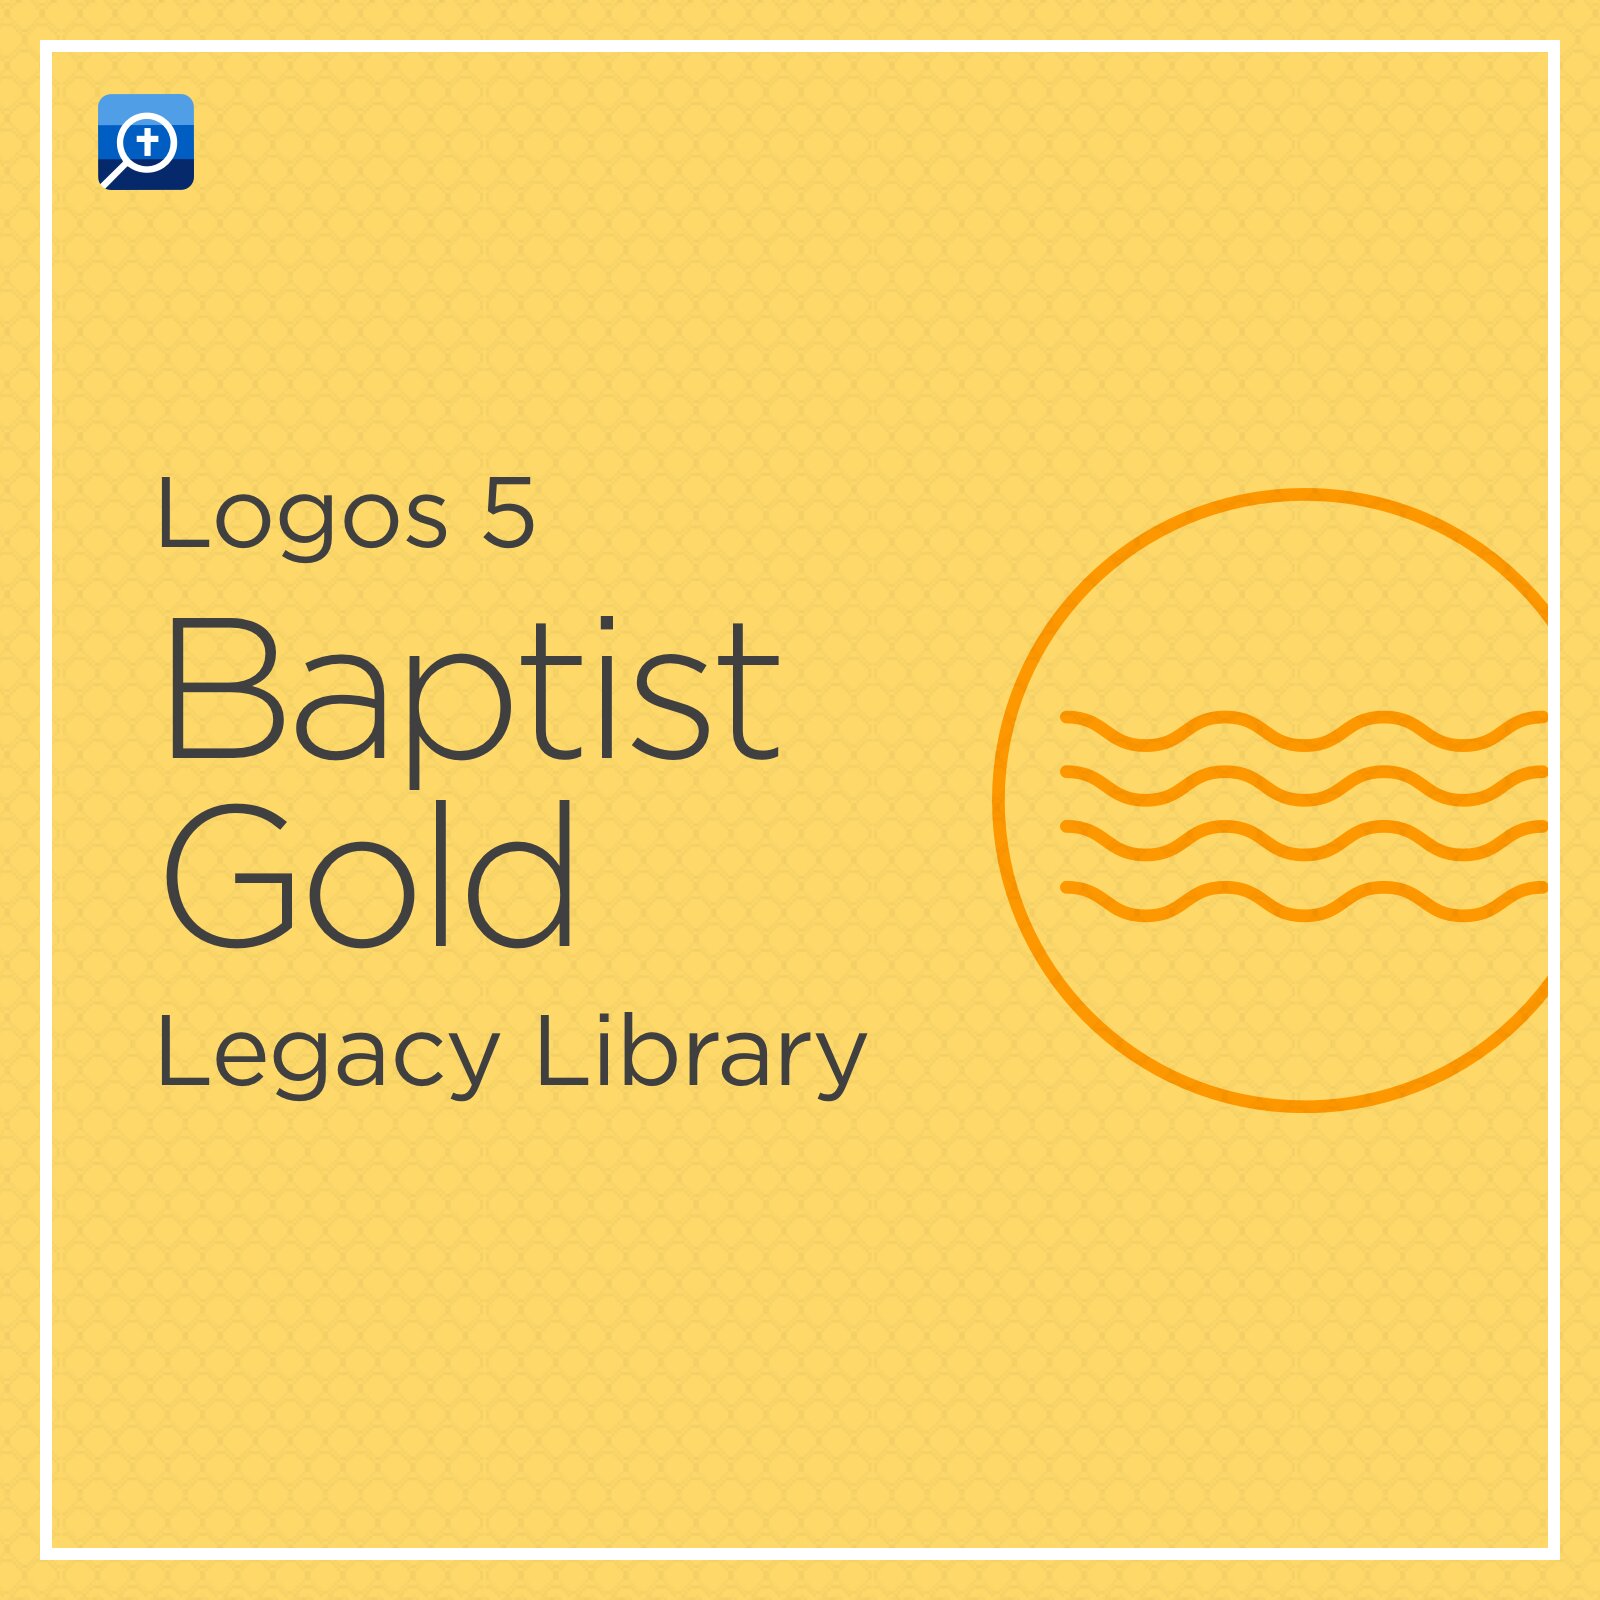 Logos 5 Baptist Gold Legacy Library